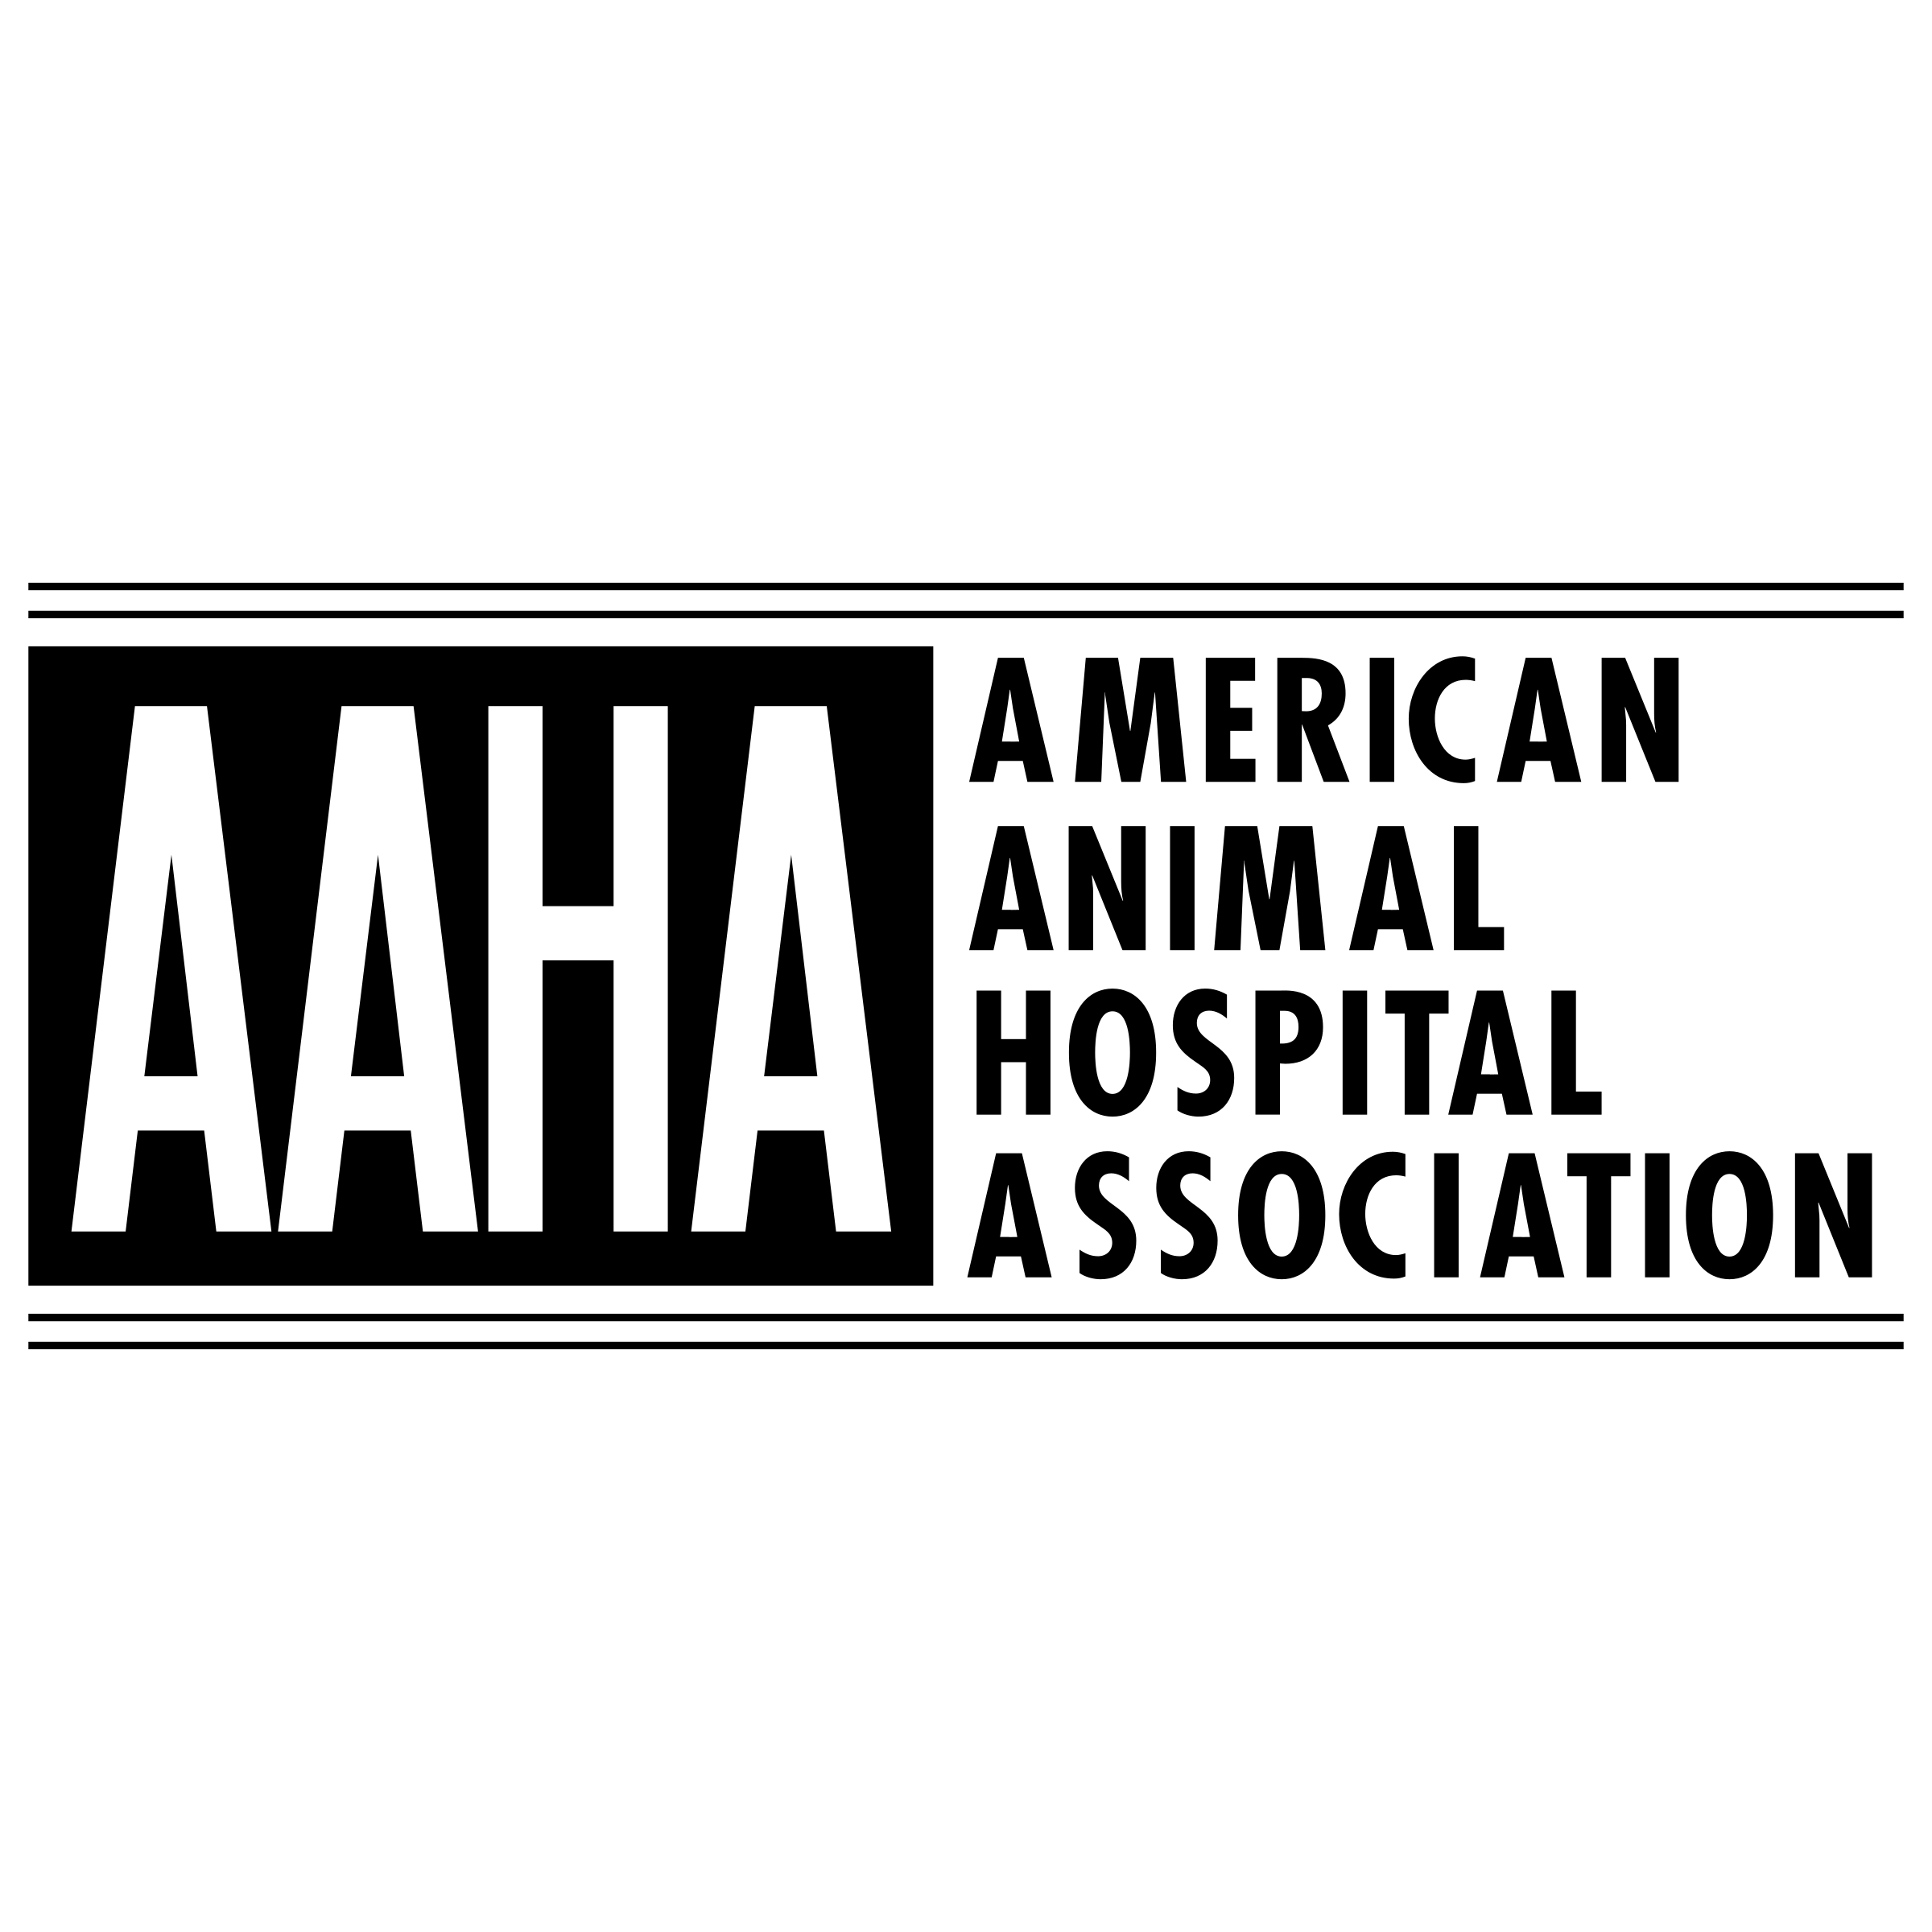 American Animal Hospital Association Logo - American Animal Hospital Association Logo PNG Transparent & SVG ...